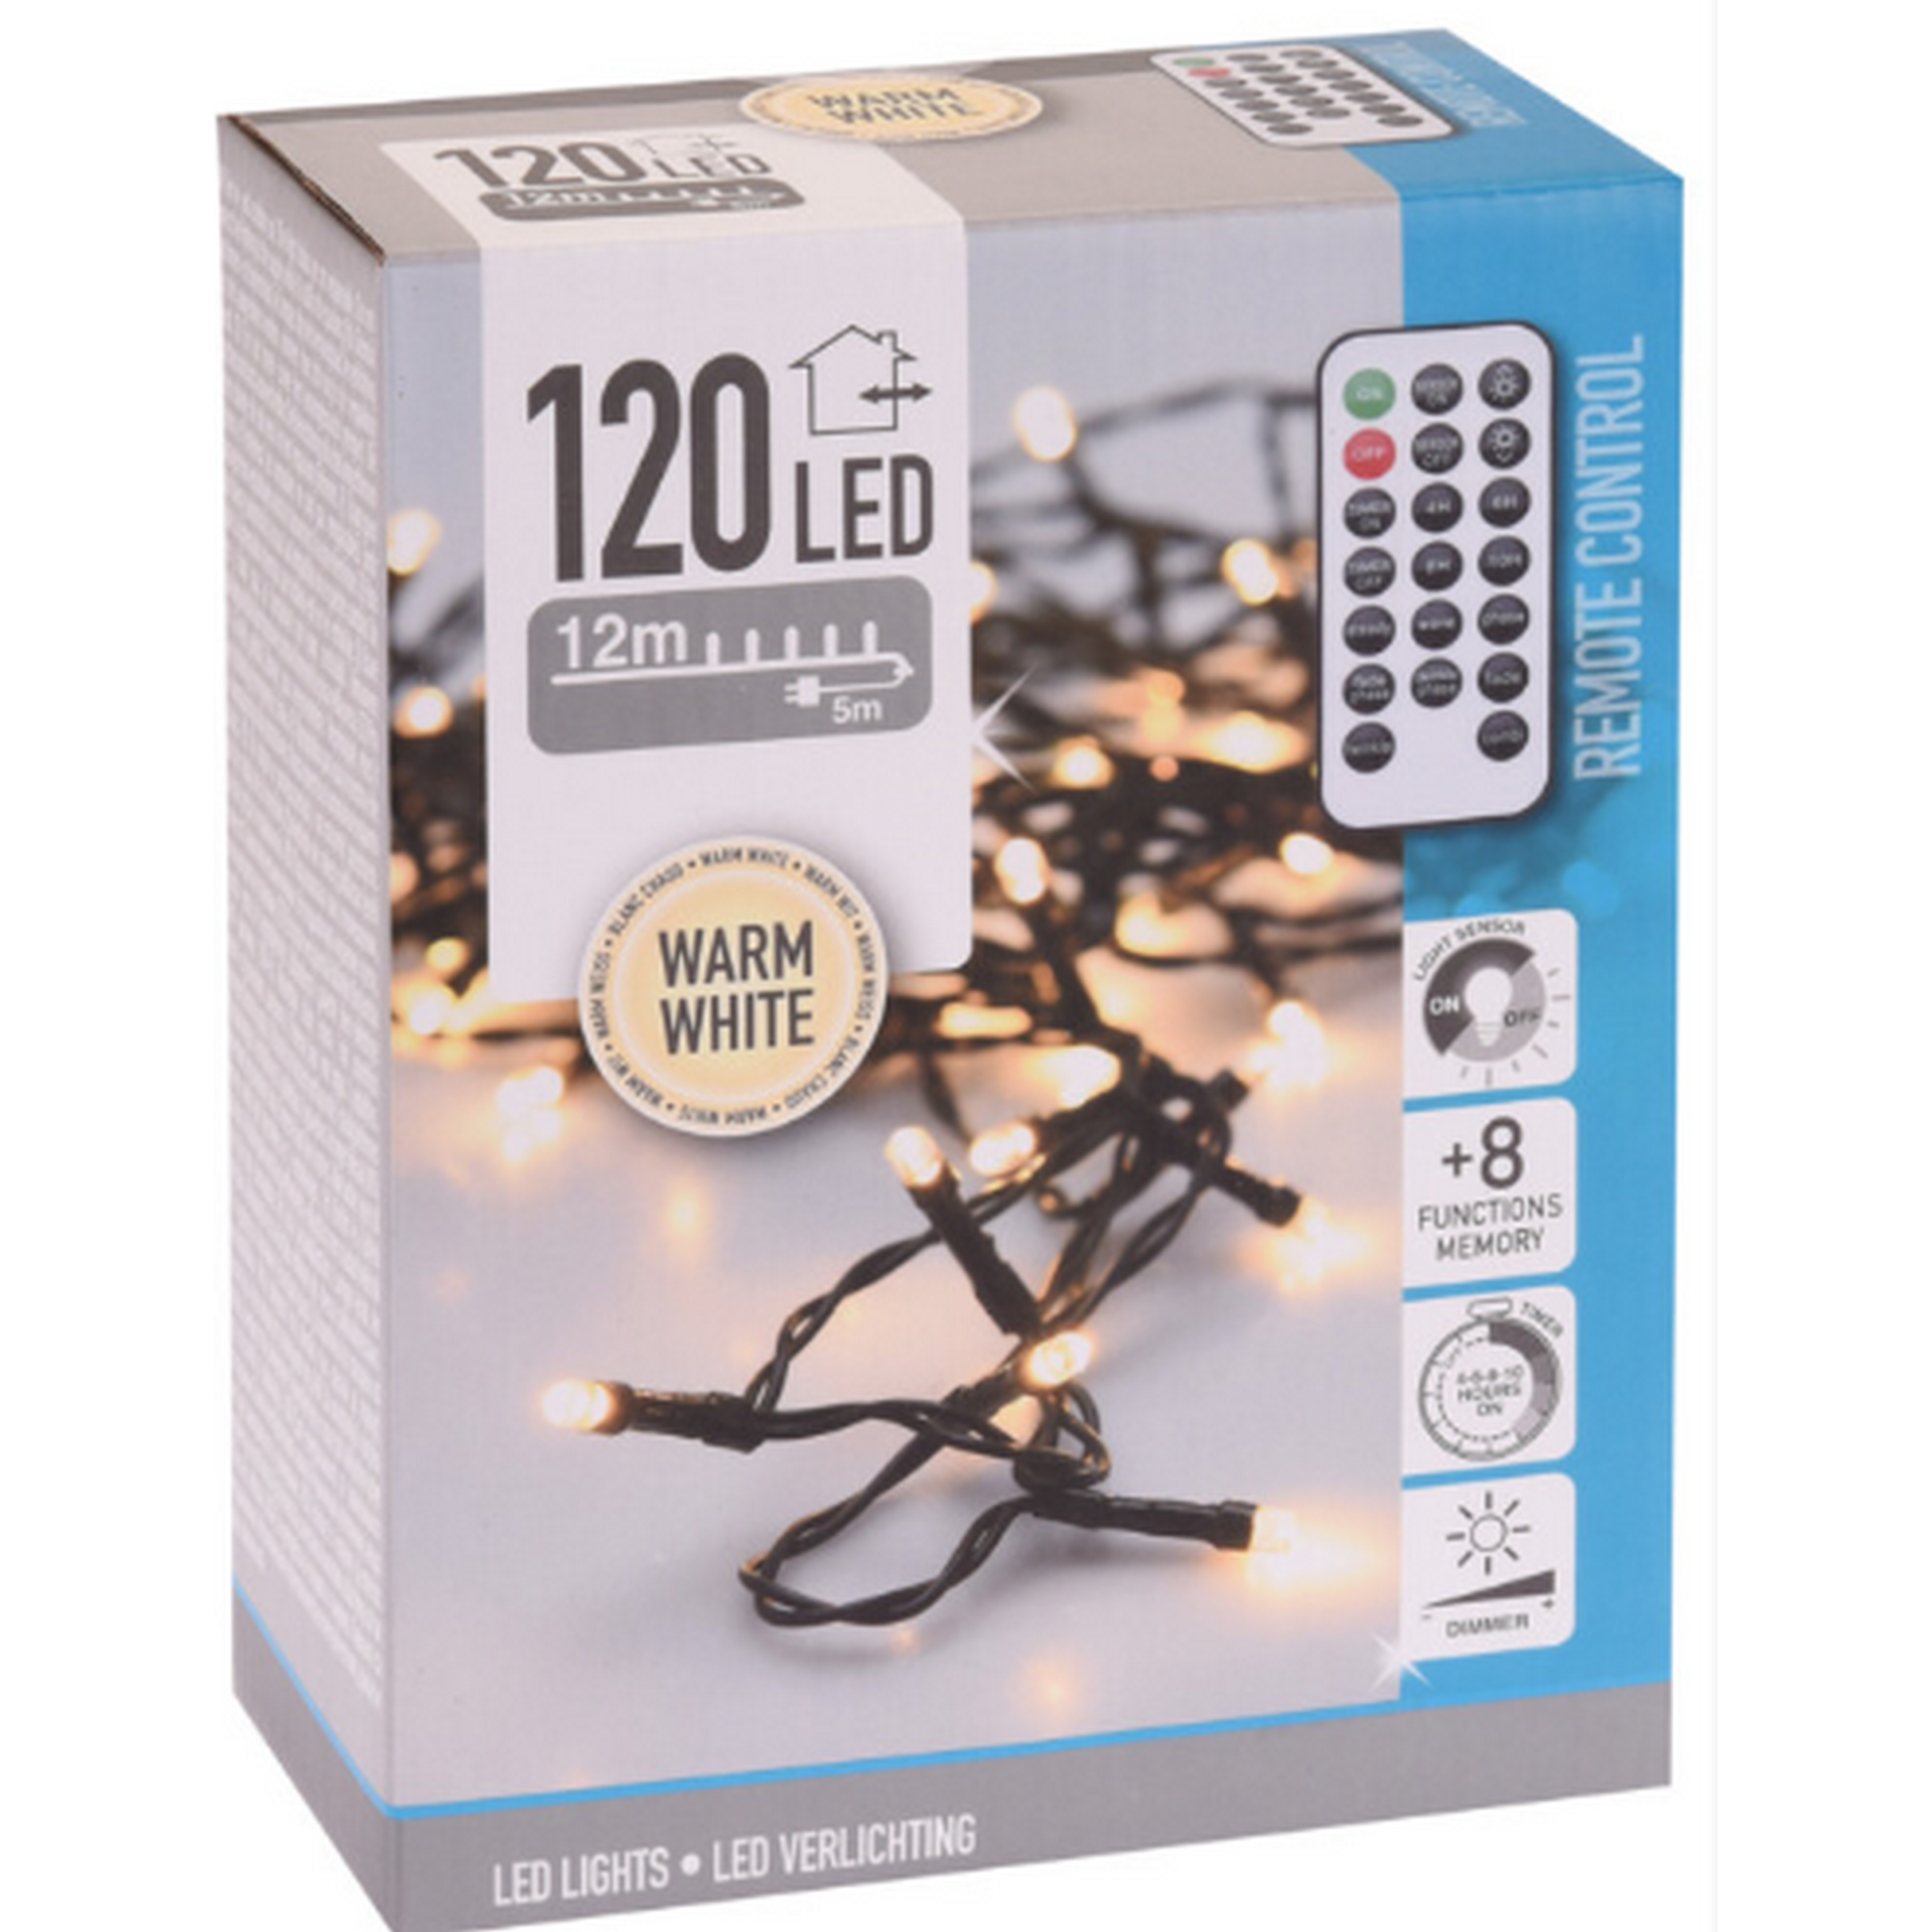 LED-Lichterkette 120 LEDs warmweiß 1200 cm + product picture